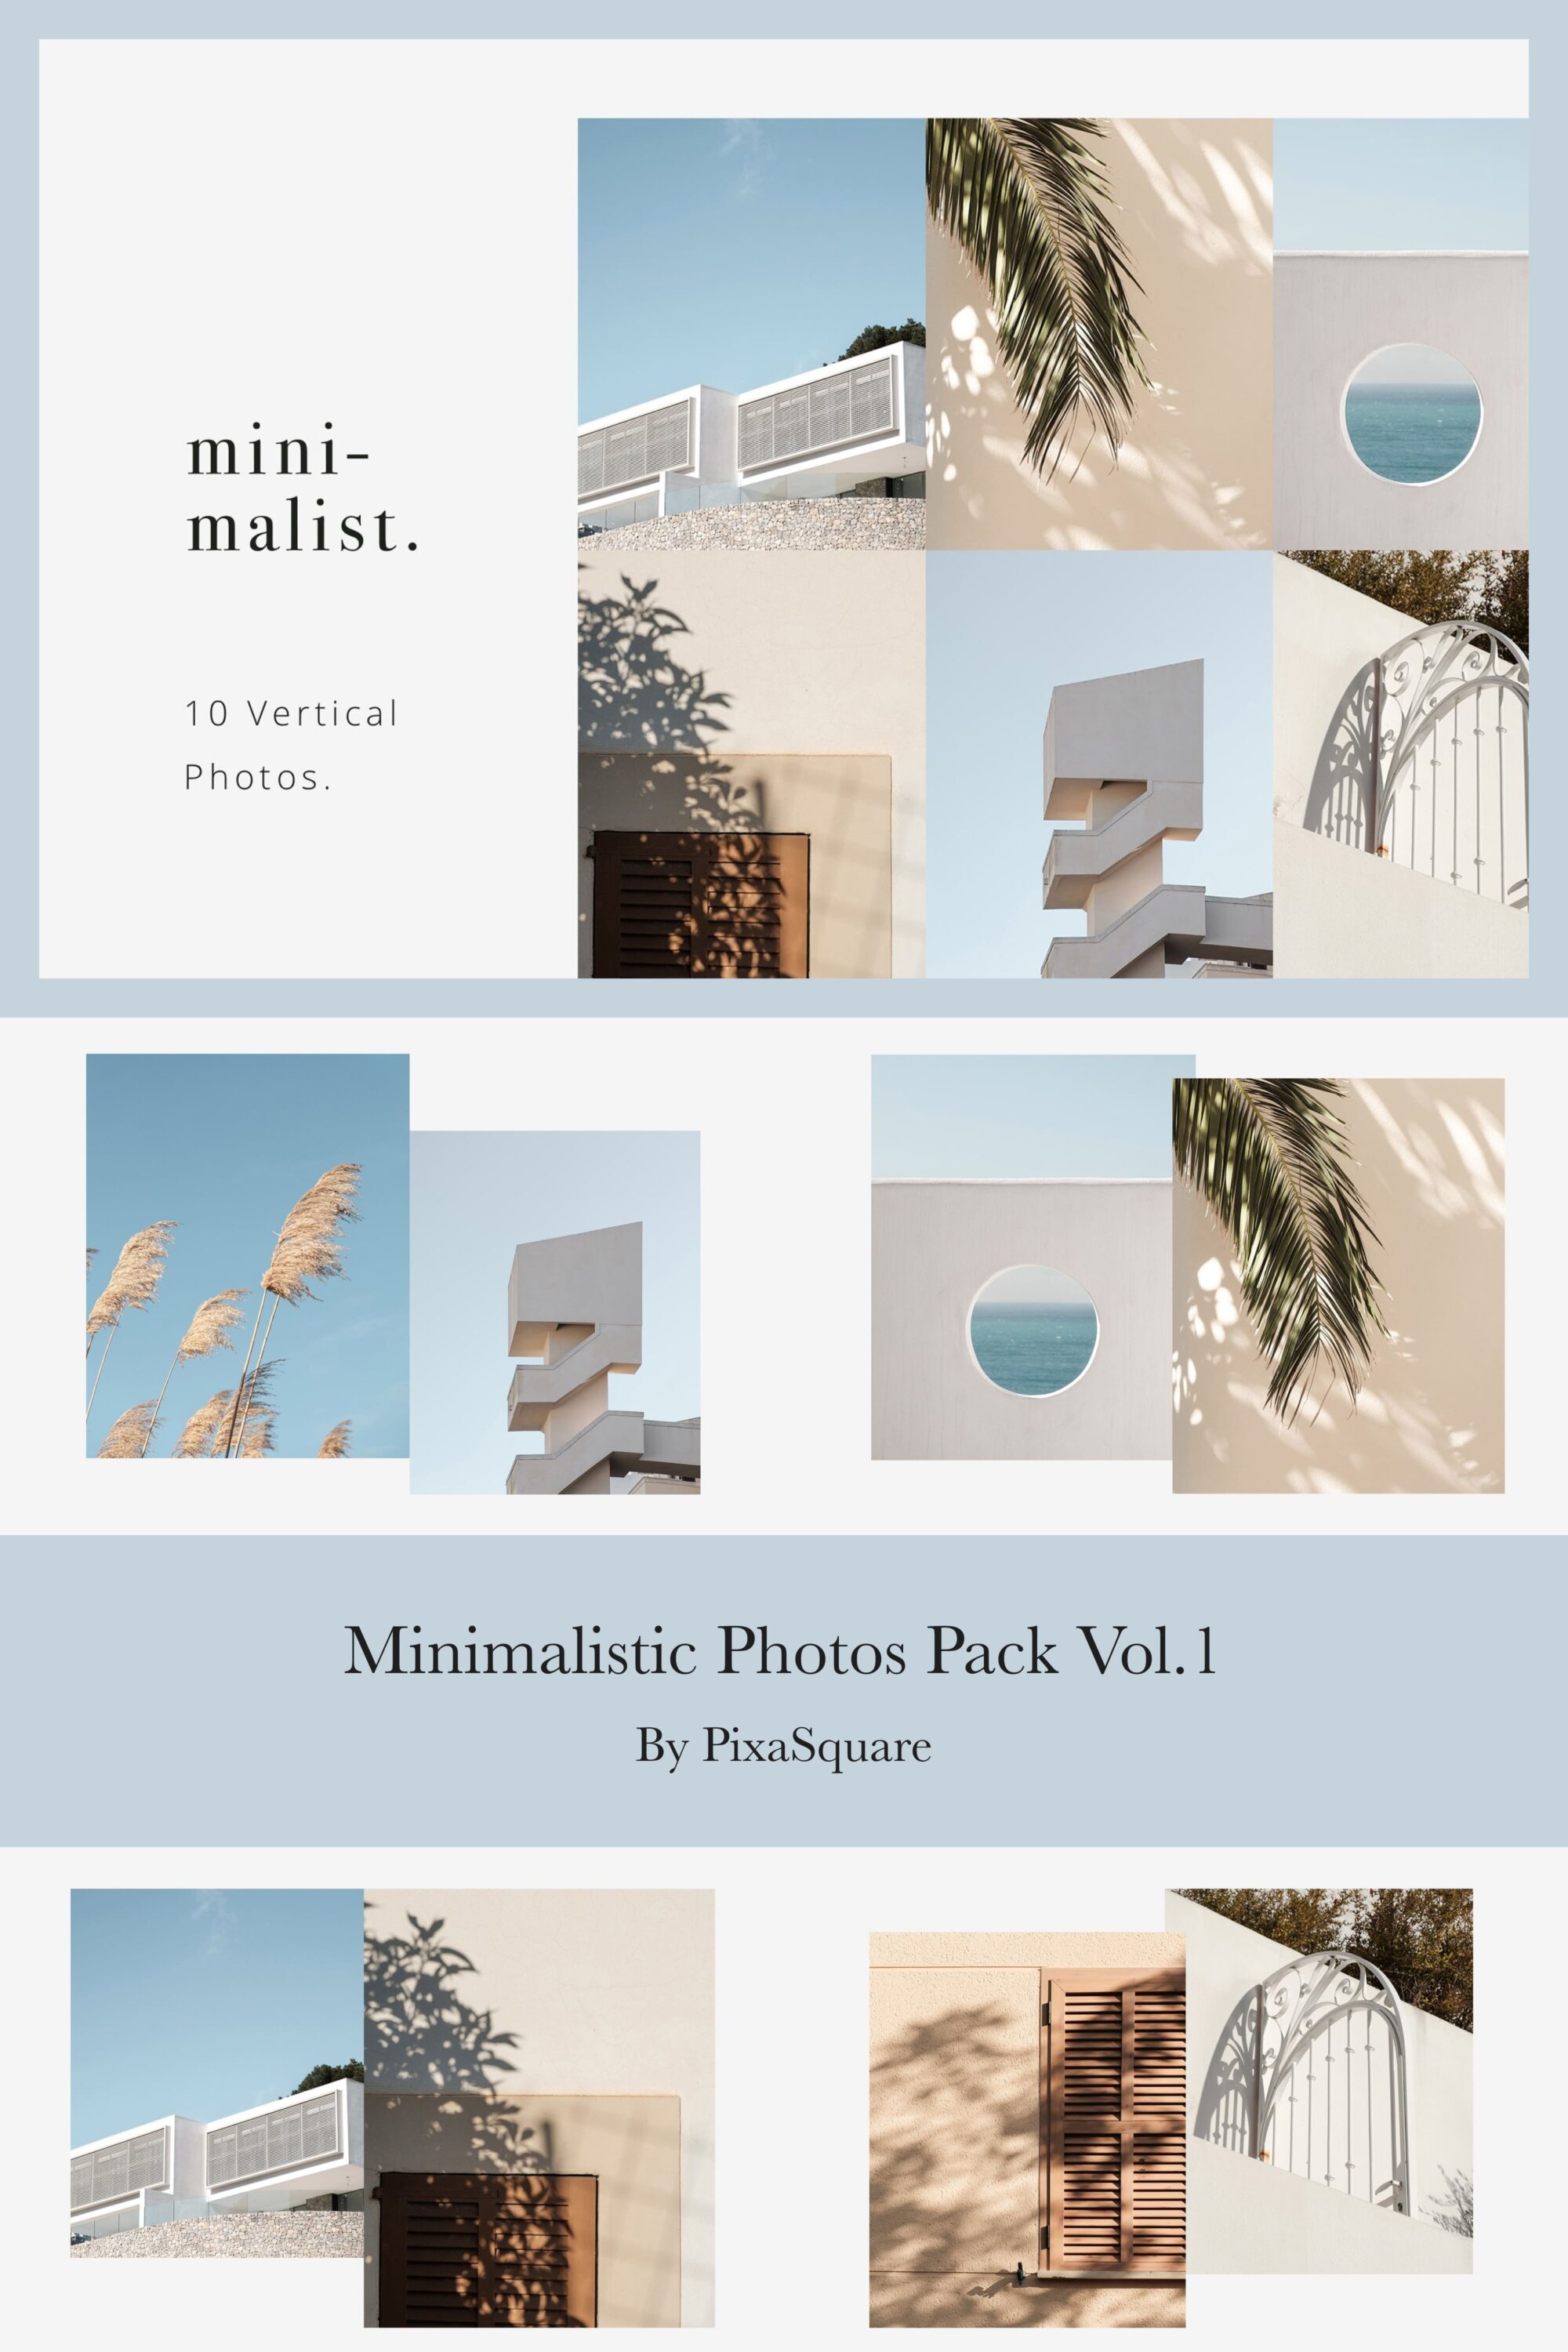 Minimalistic Photos Pack Vol.1 - Pinterest.